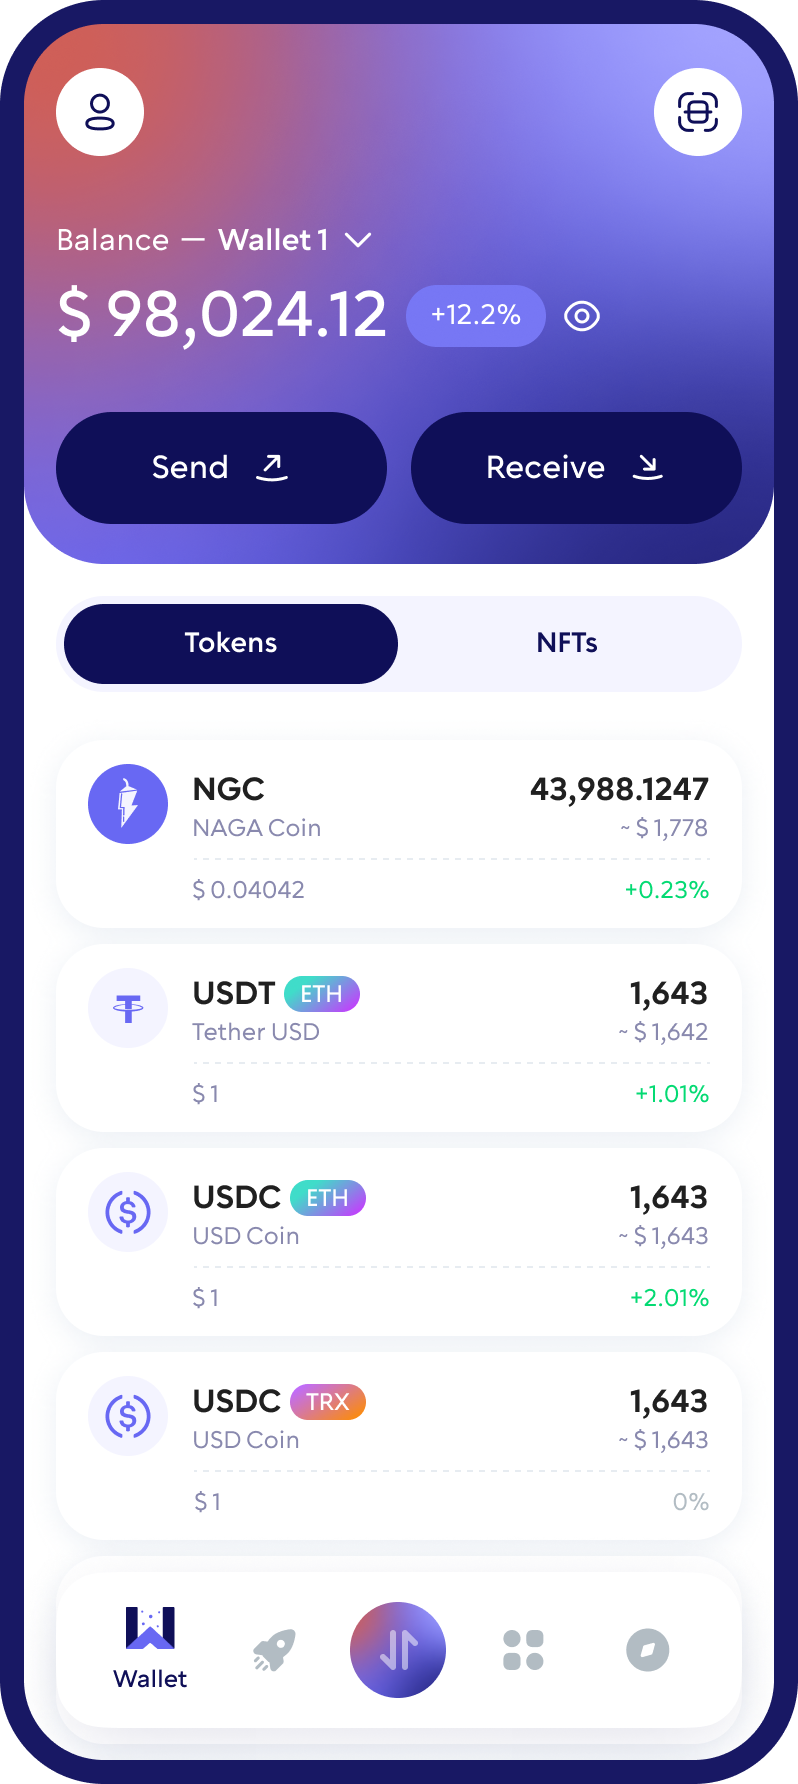 NAGA Coin (NGC) Cryptocurrency Wallet Walletverse